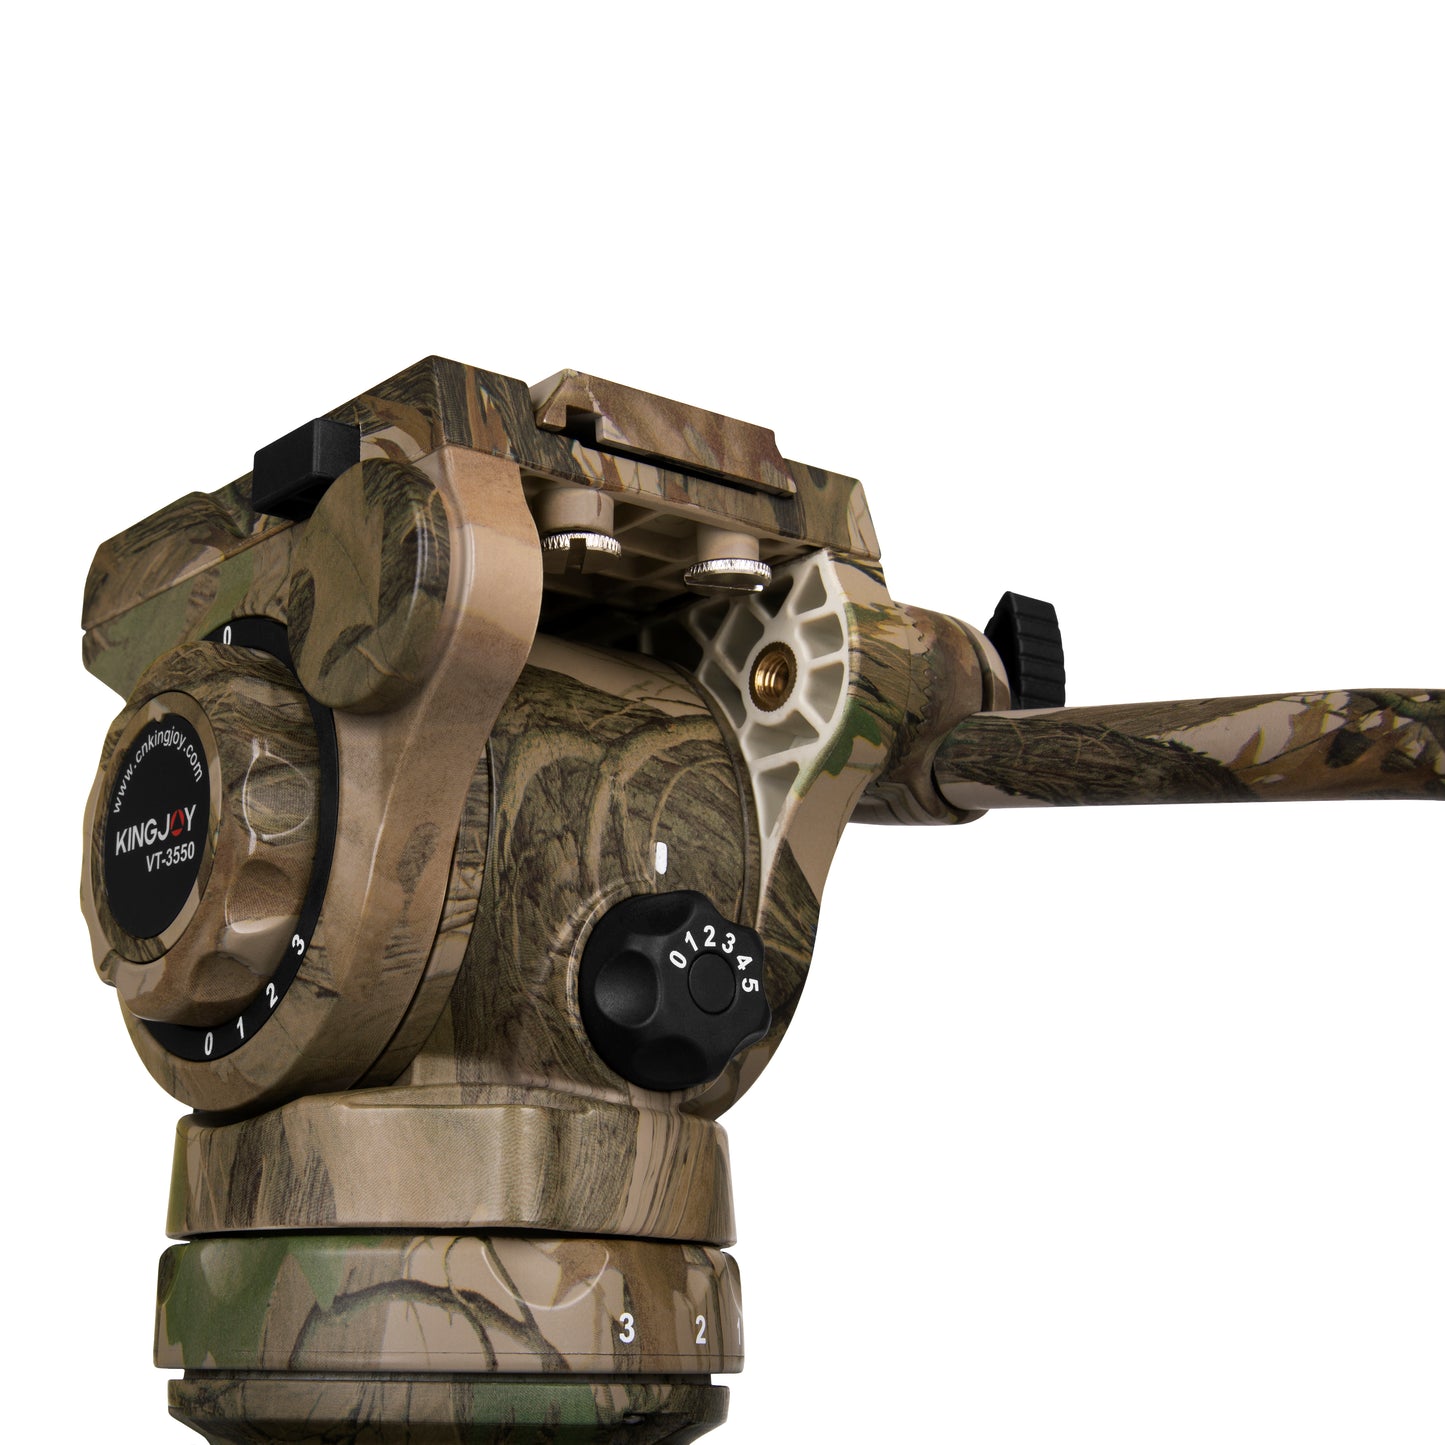 Kingjoy VT-3550M camouflage professional fluid head-3.5lbs, base dia 3.5in